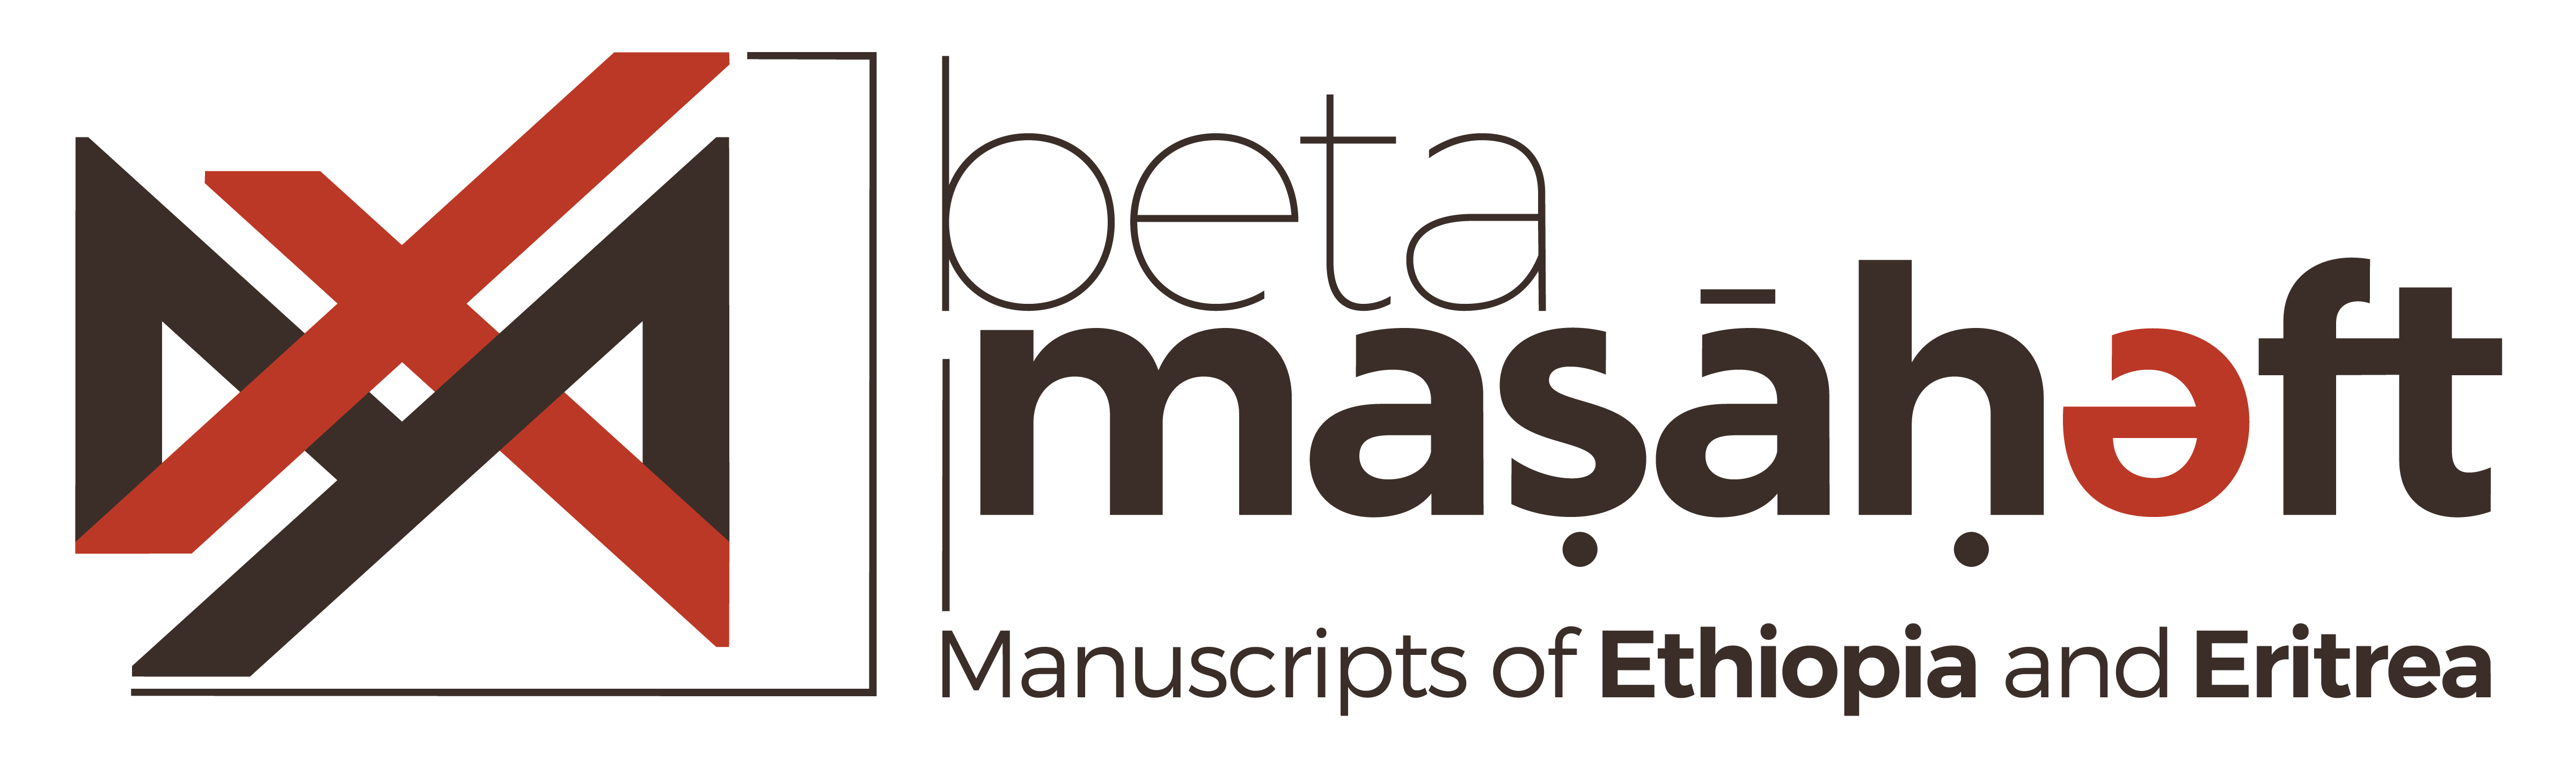 Beta maṣāḥǝft Project logo